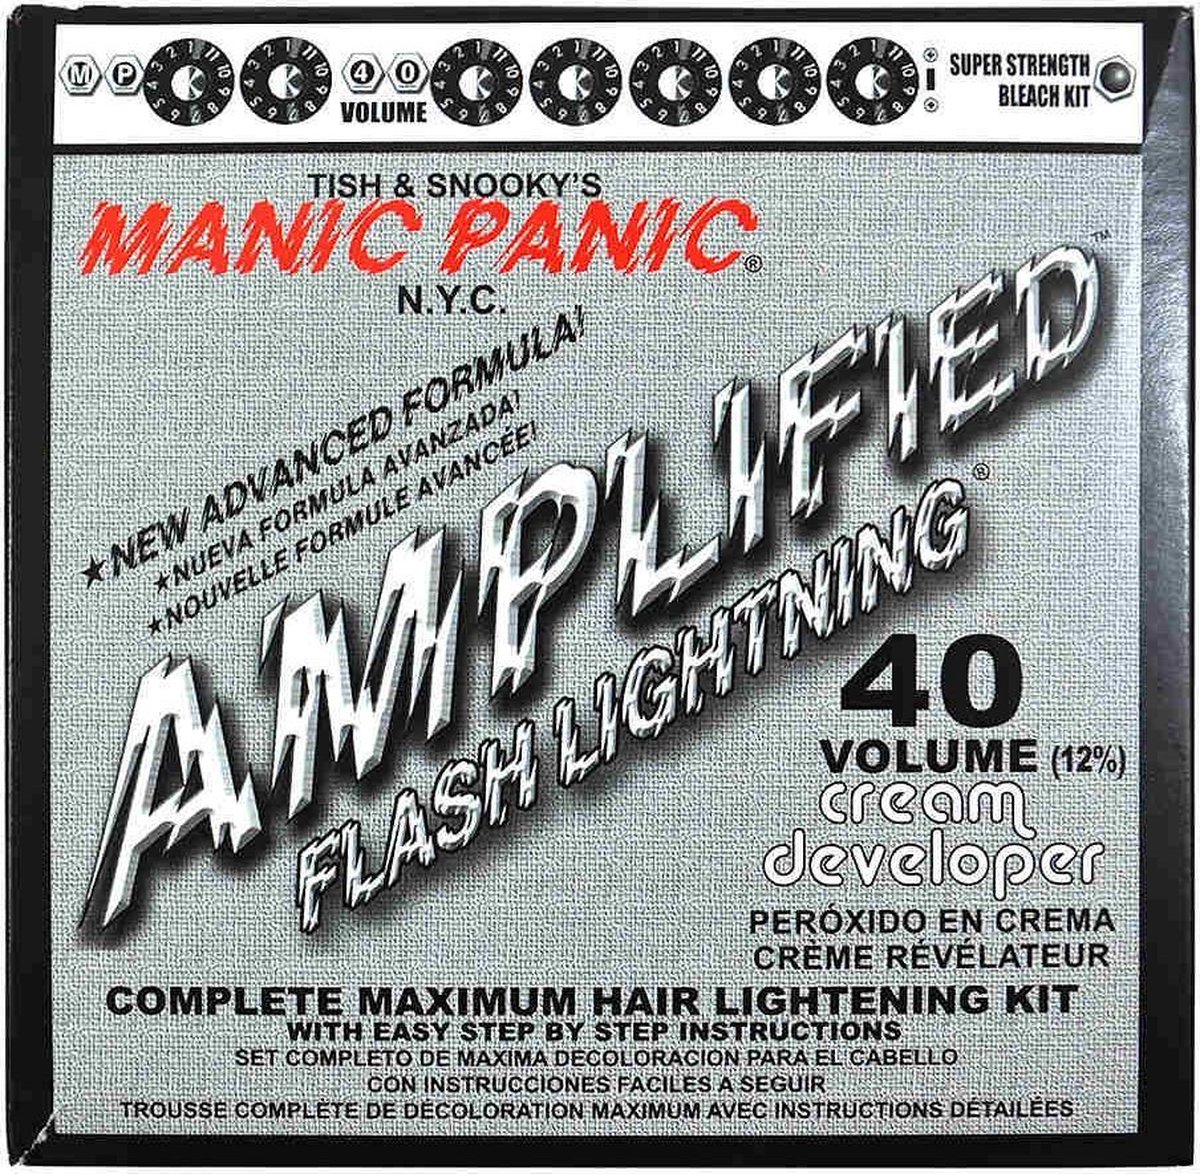 Flashlightning haar bleekmiddel kit 40 volume - Manic Panic